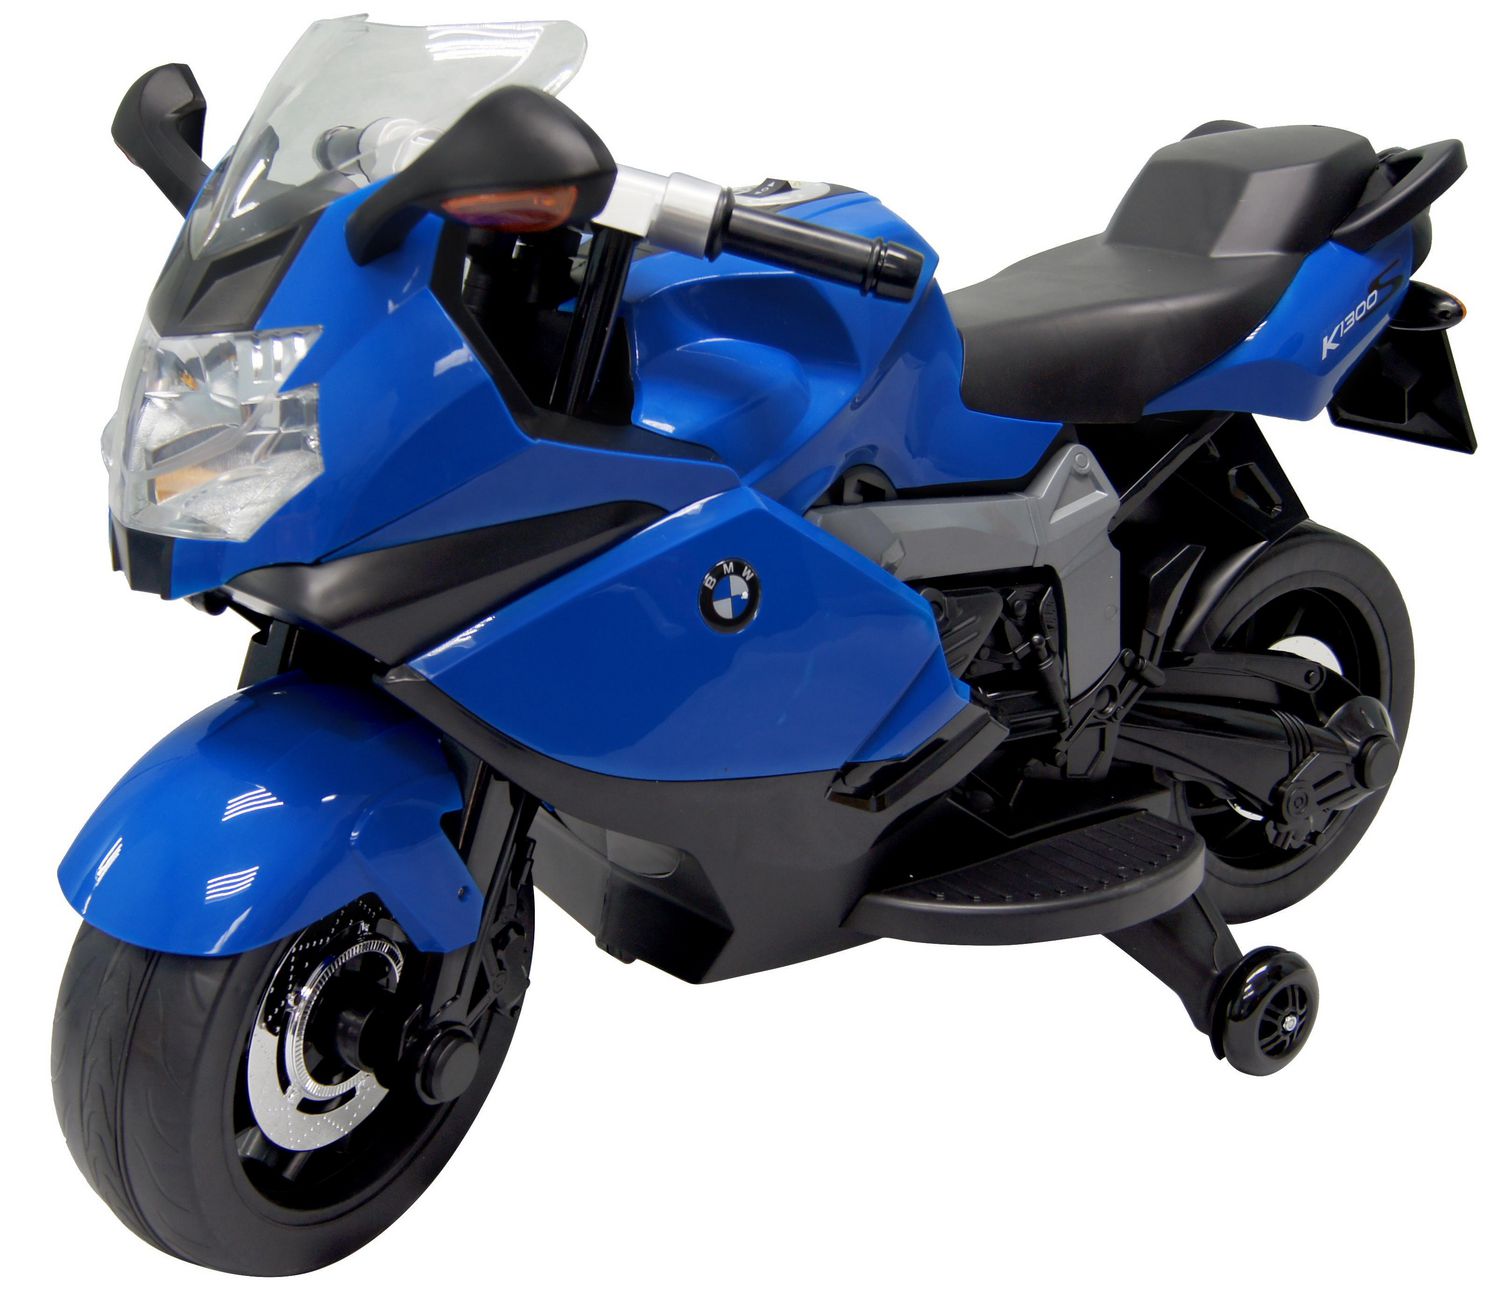 BMW Ride On Motorcycle 12V- Blue | Walmart Canada